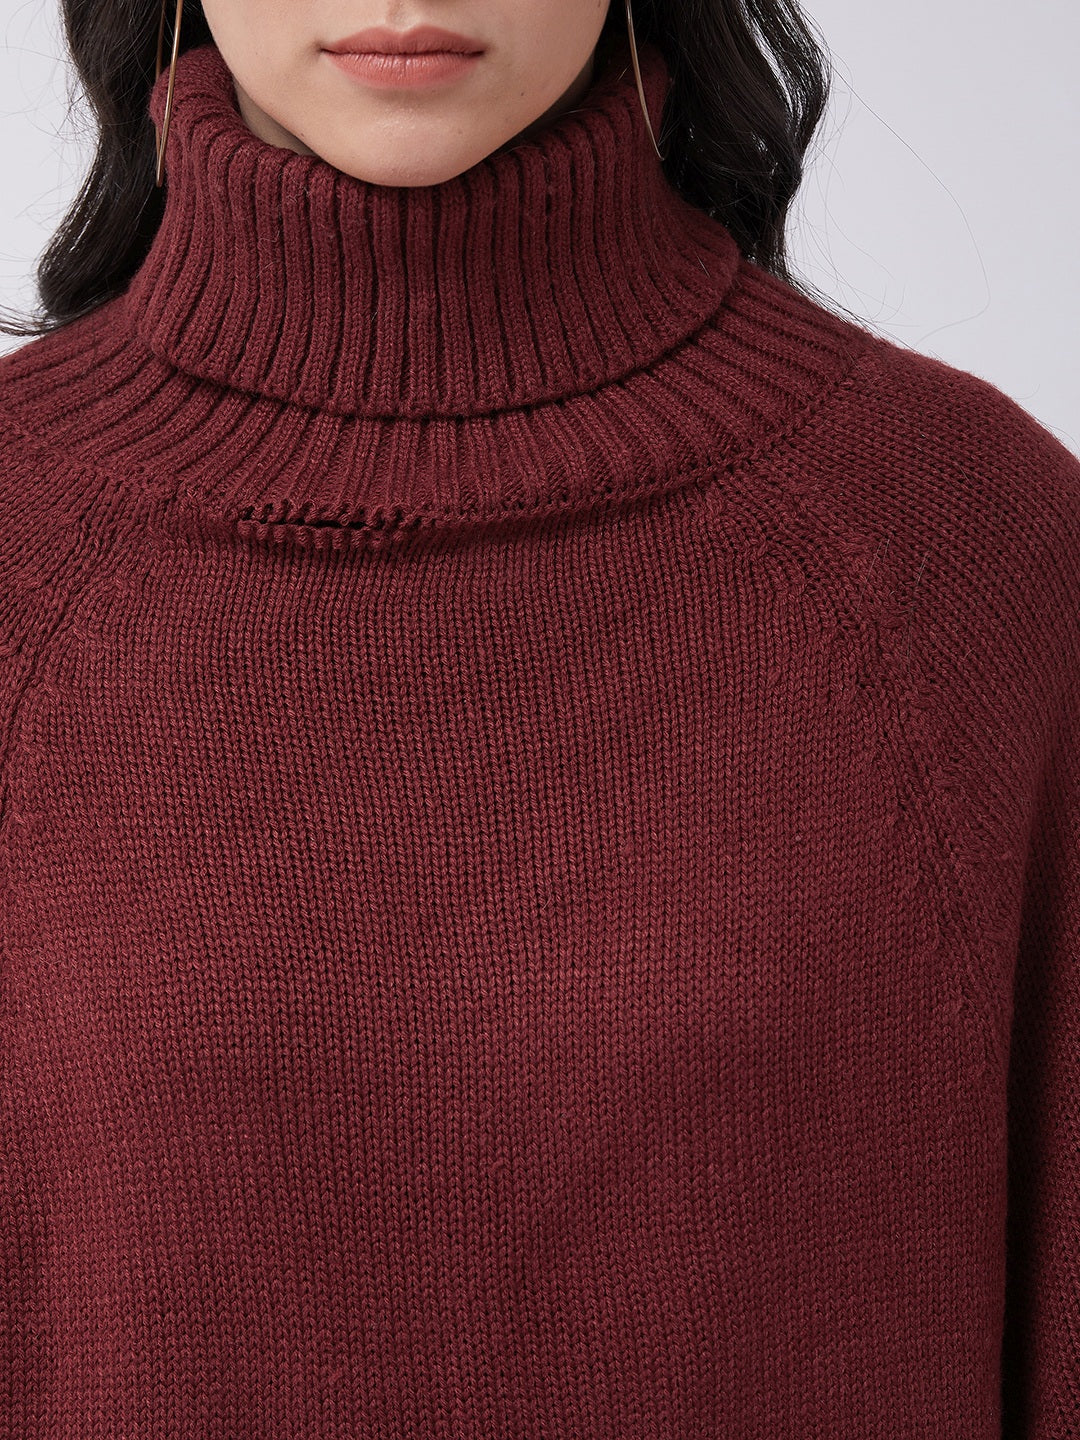 Maroon Sweater Poncho